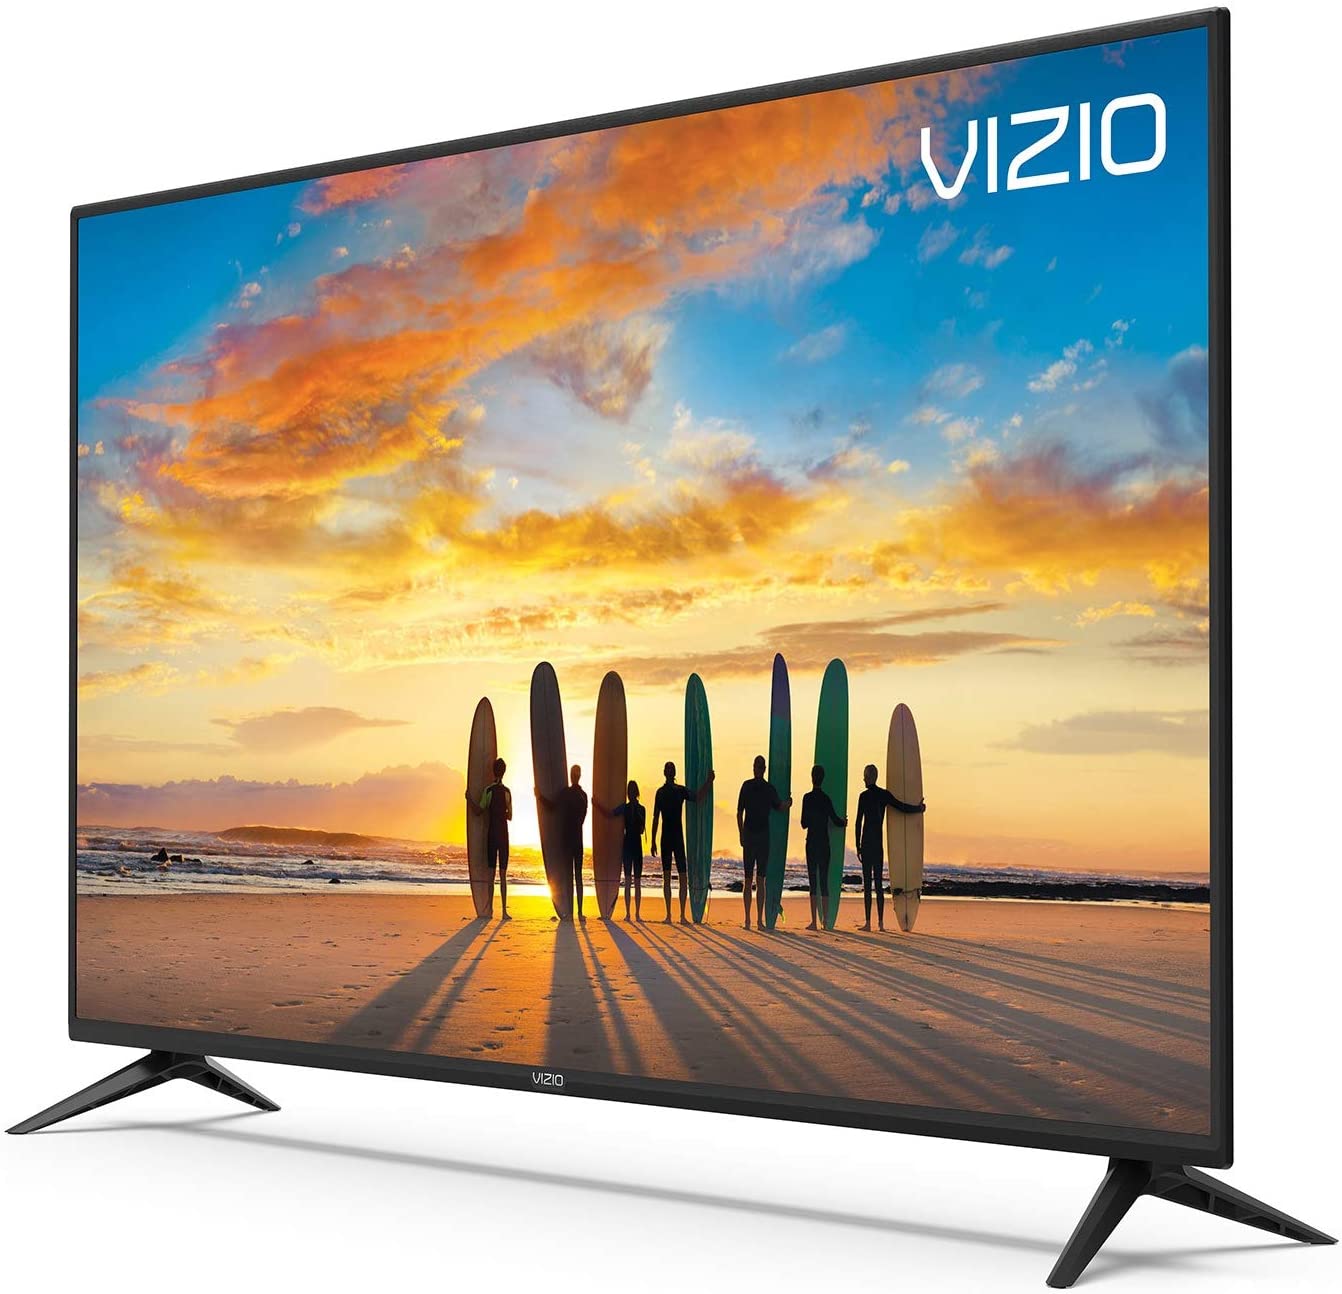 The Best Vizio 50 Inch TVs of 2021: Top Rated Vizio TVs